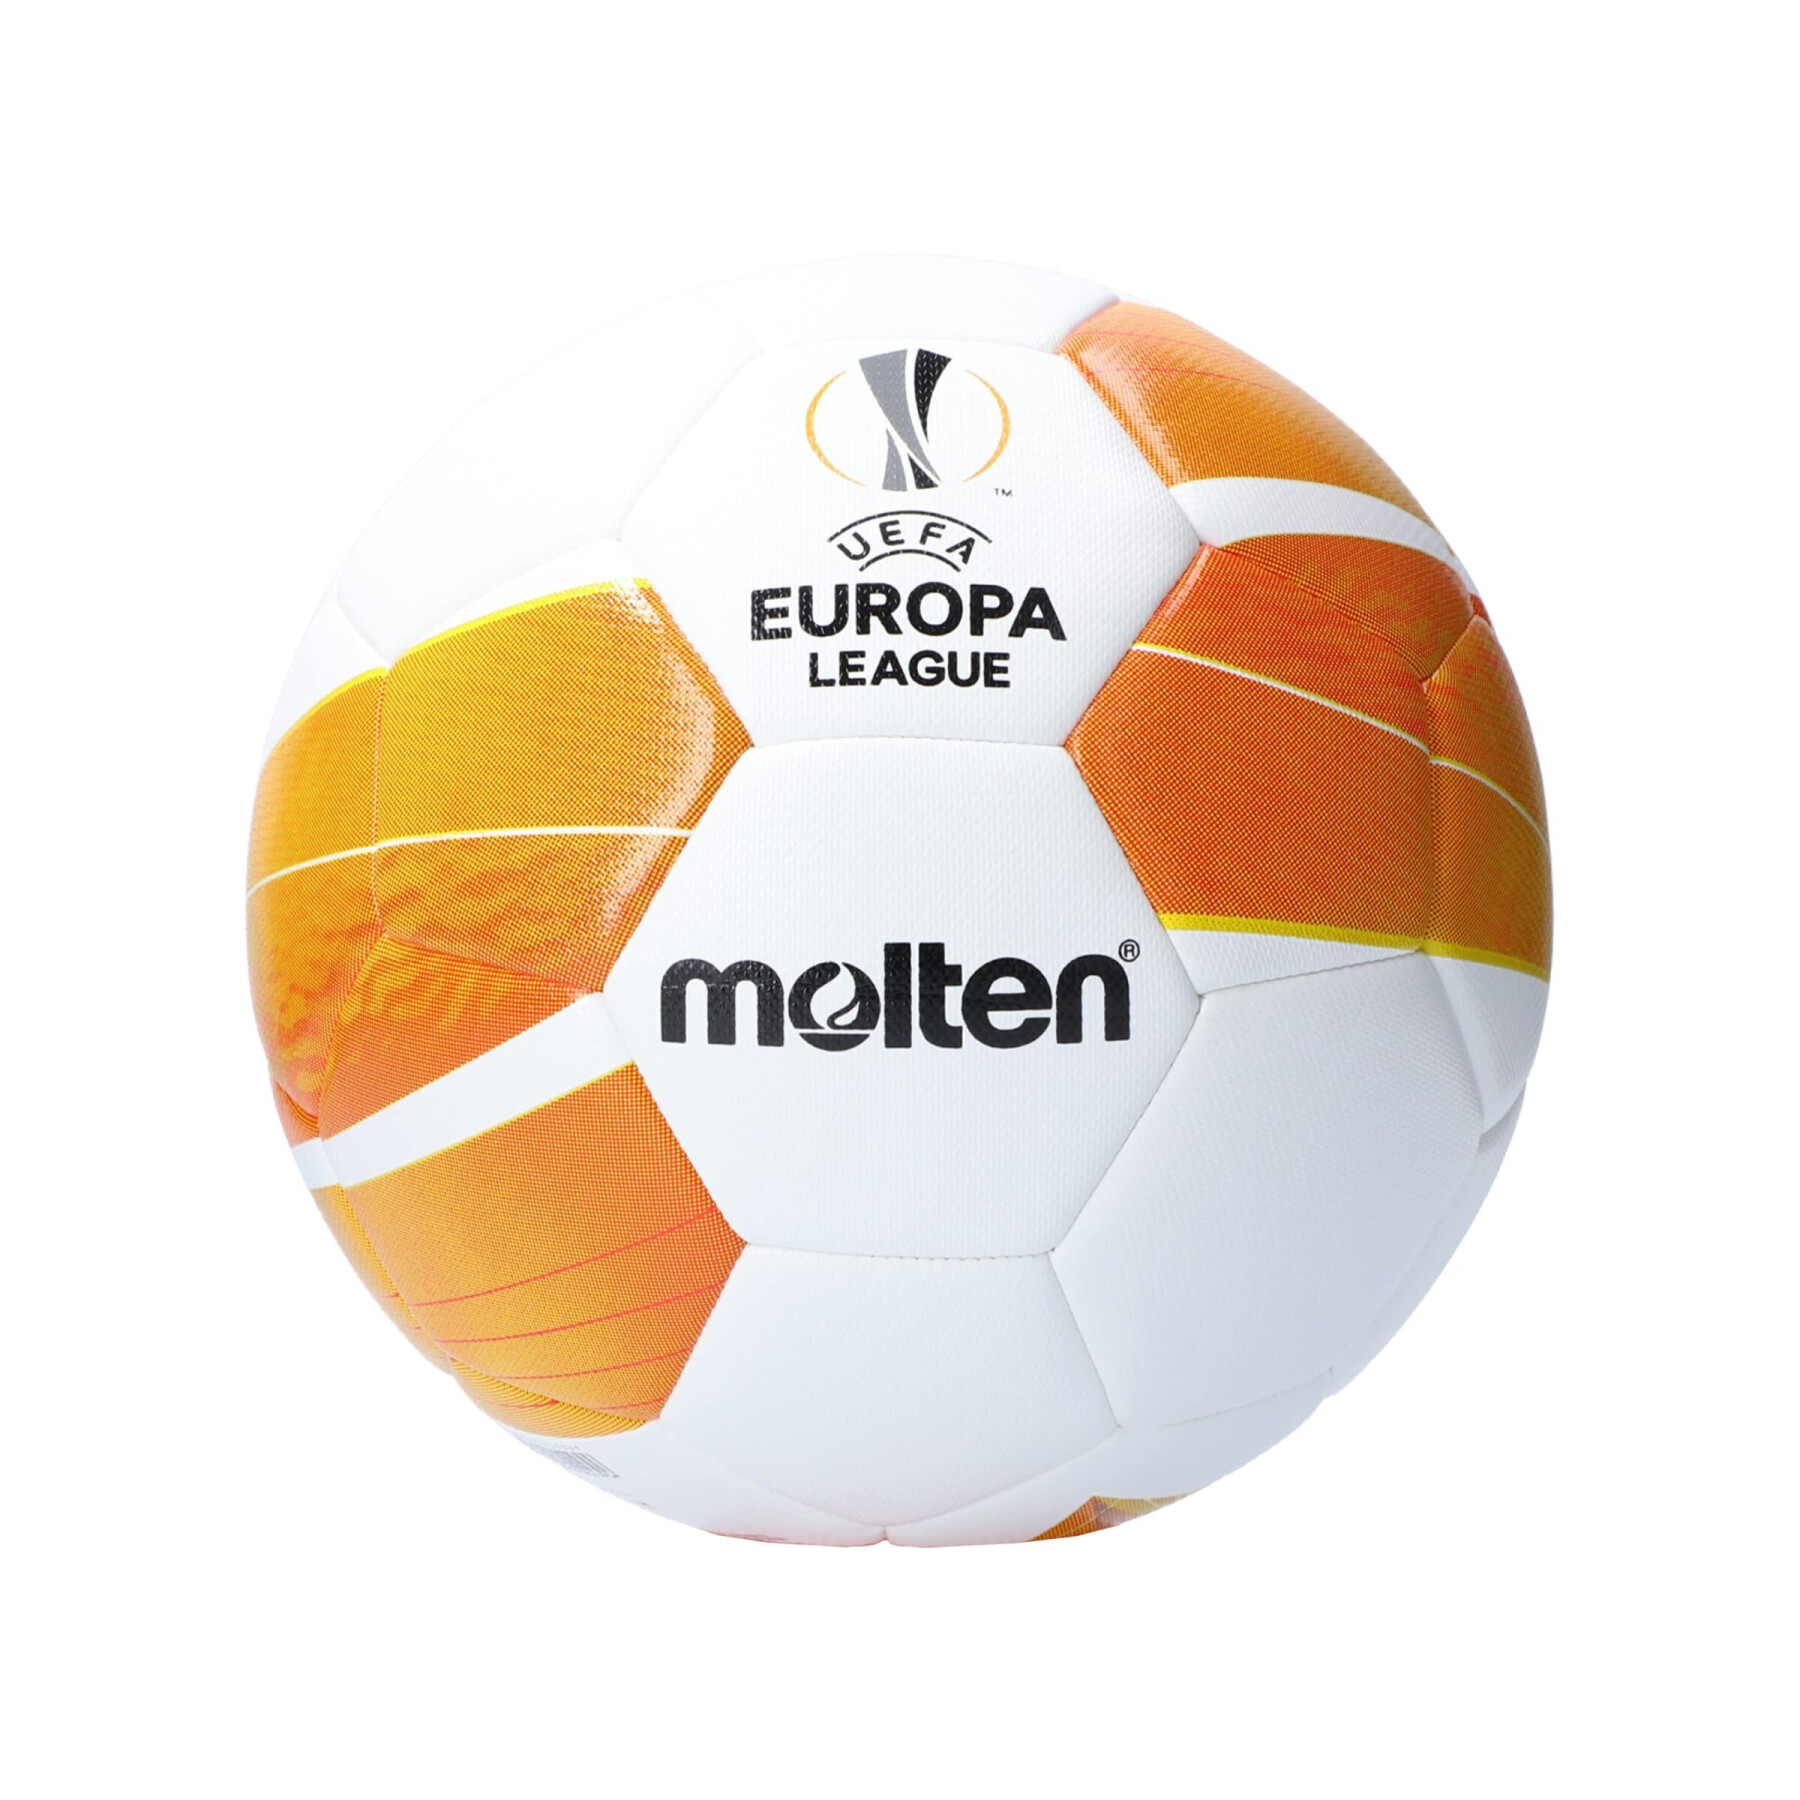 Training ball Molten UEFA Europa League